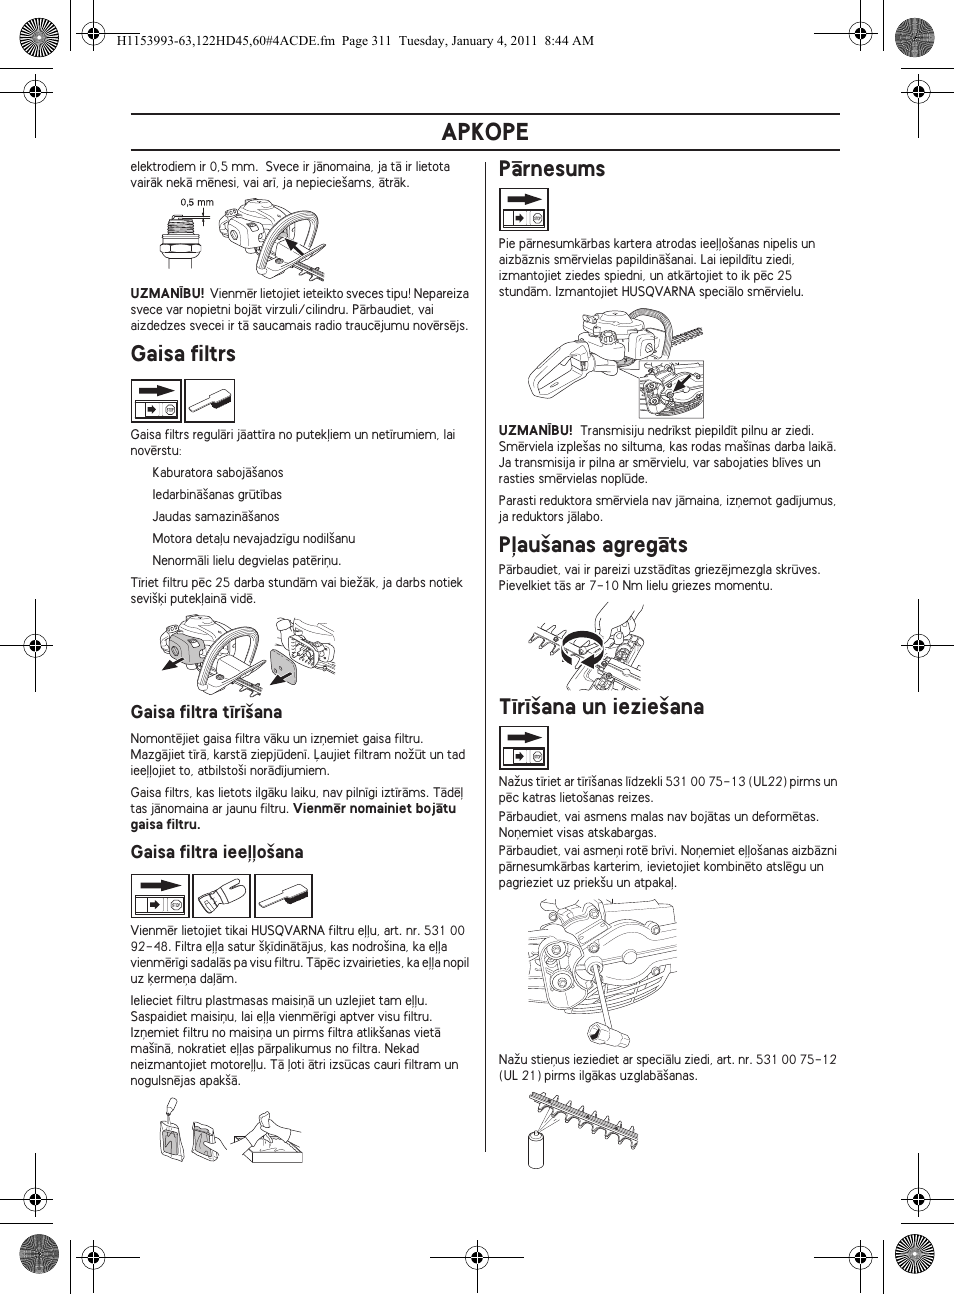 Apkope, Gaisa filtrs, Pçrnesums | Husqvarna 122HD60 User Manual | Page 311  / 532